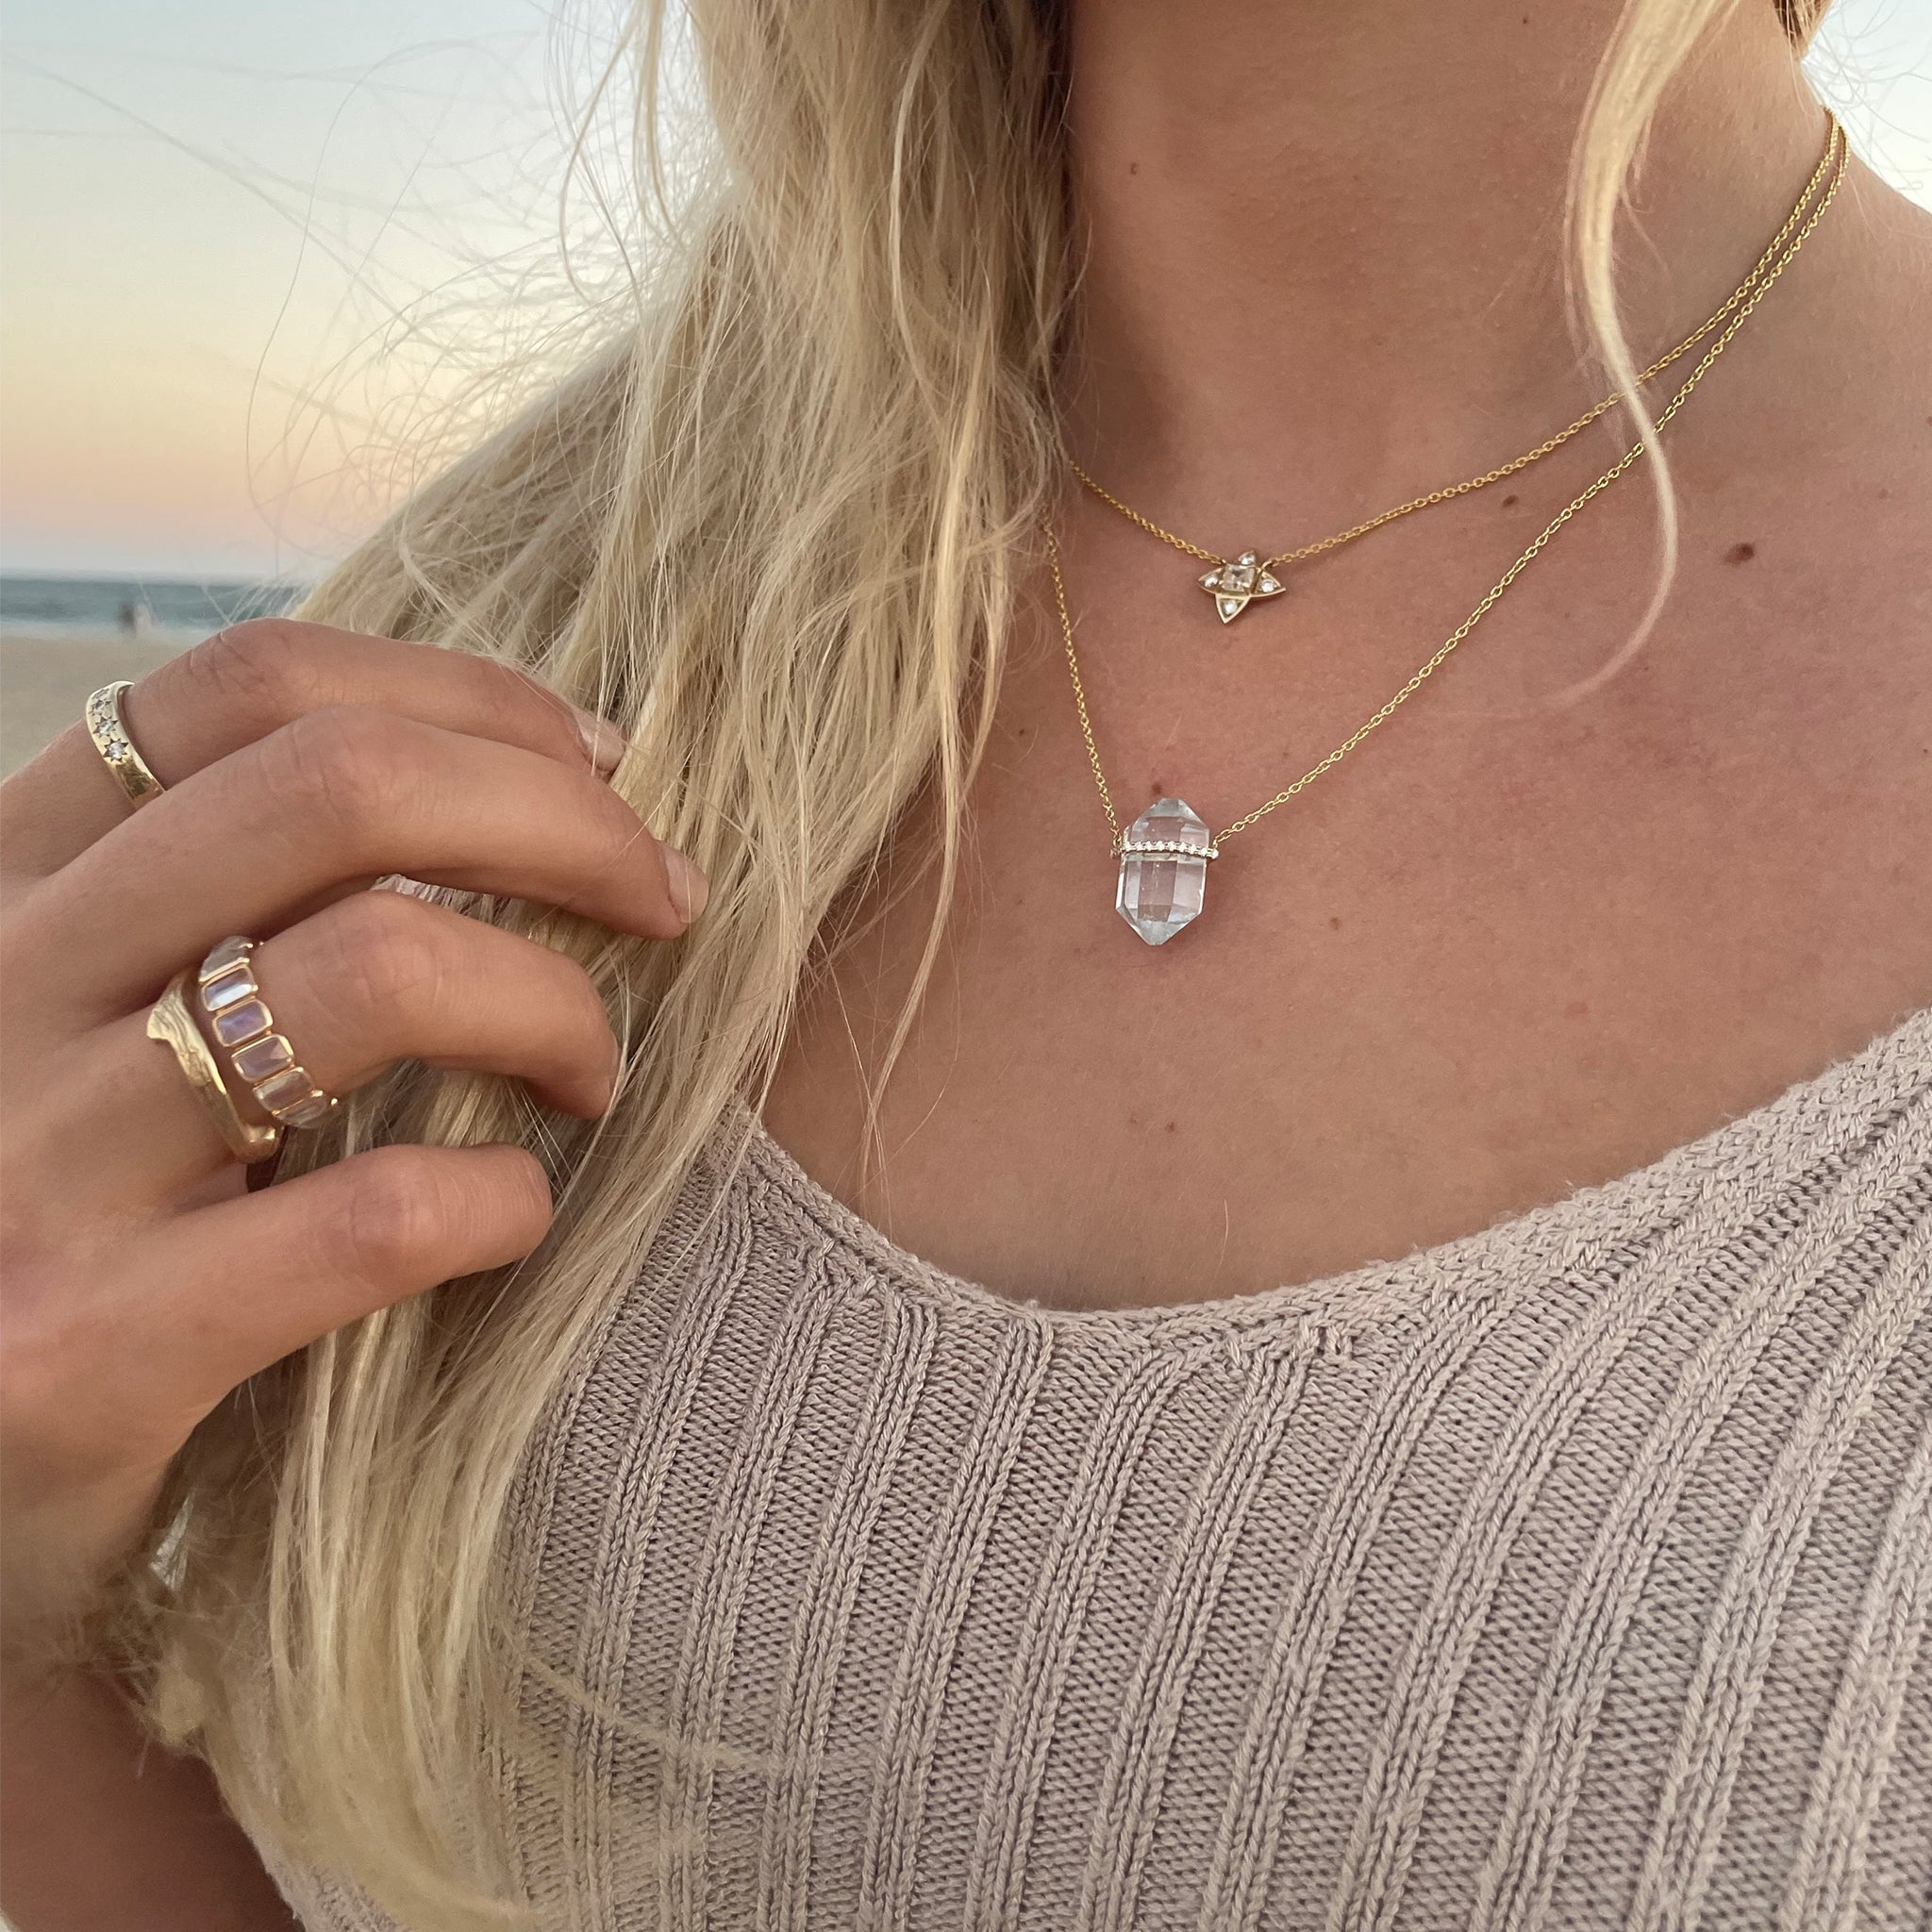 Serenity Aquamarine Crystal Pendant Necklaces Carter Eve Jewelry 